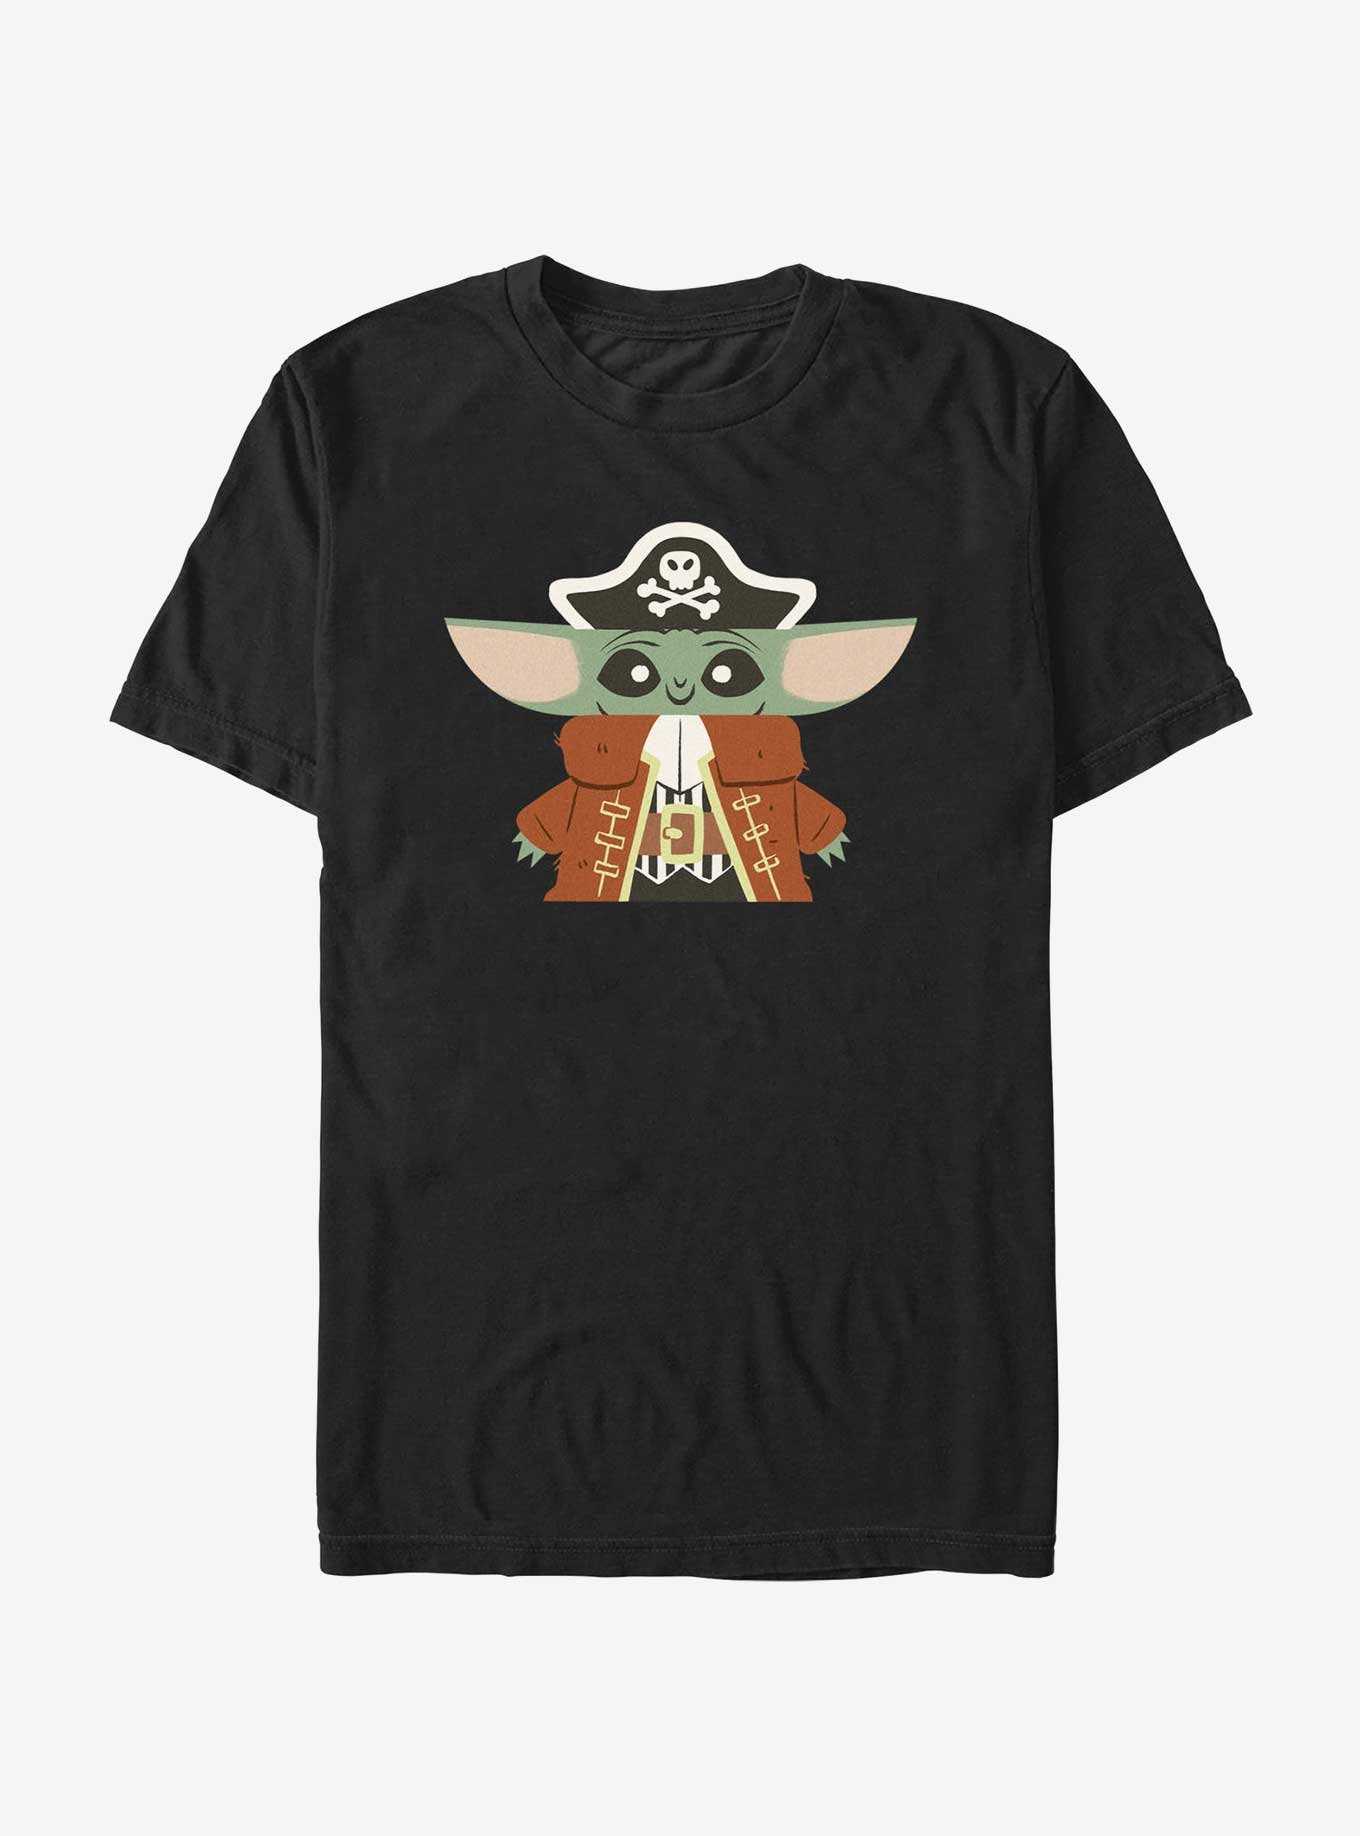 Star Wars The Mandalorian Pirate Child T-Shirt, , hi-res